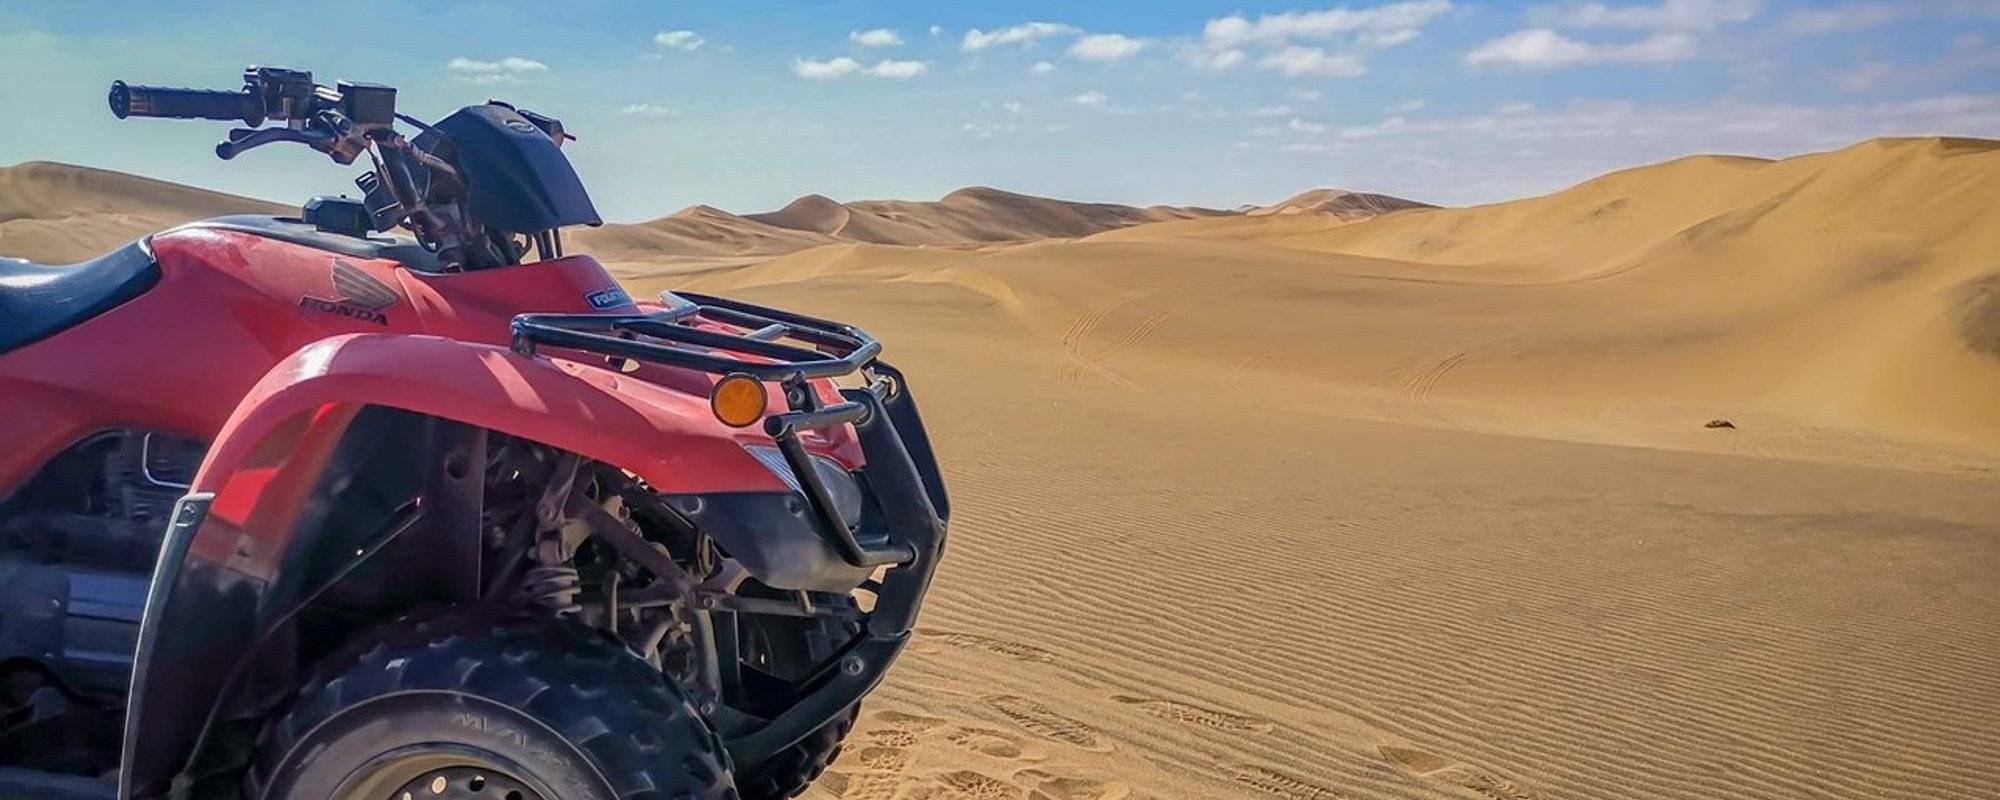 Quad bike riding in the sand dunes of Swakopmund, Namibia - African Adventure